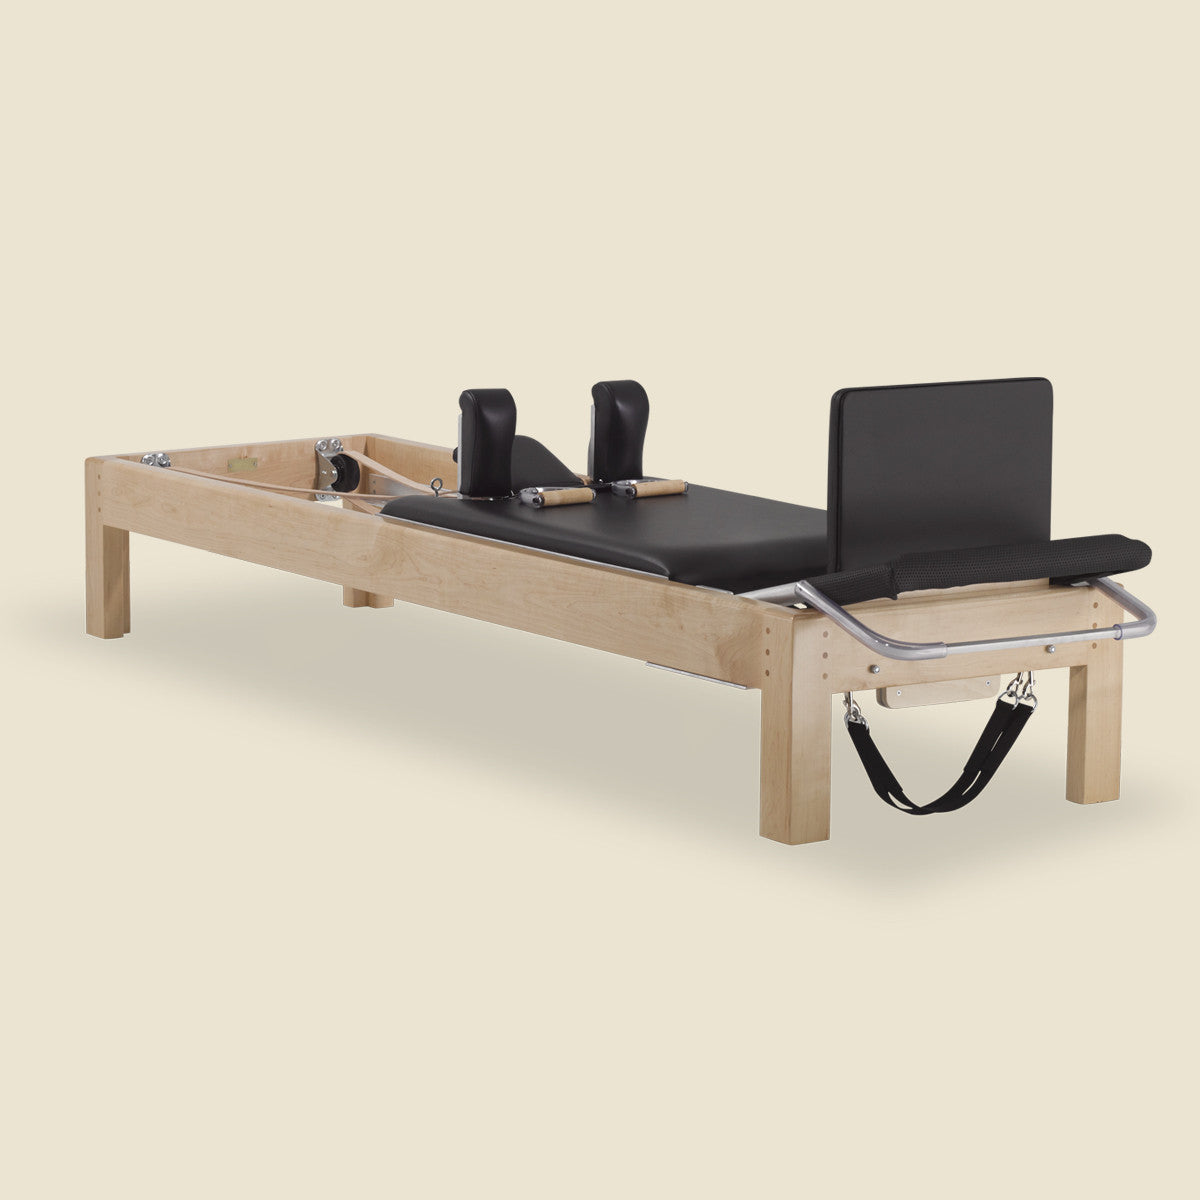 Small Arm Chair - Gratz™ Pilates